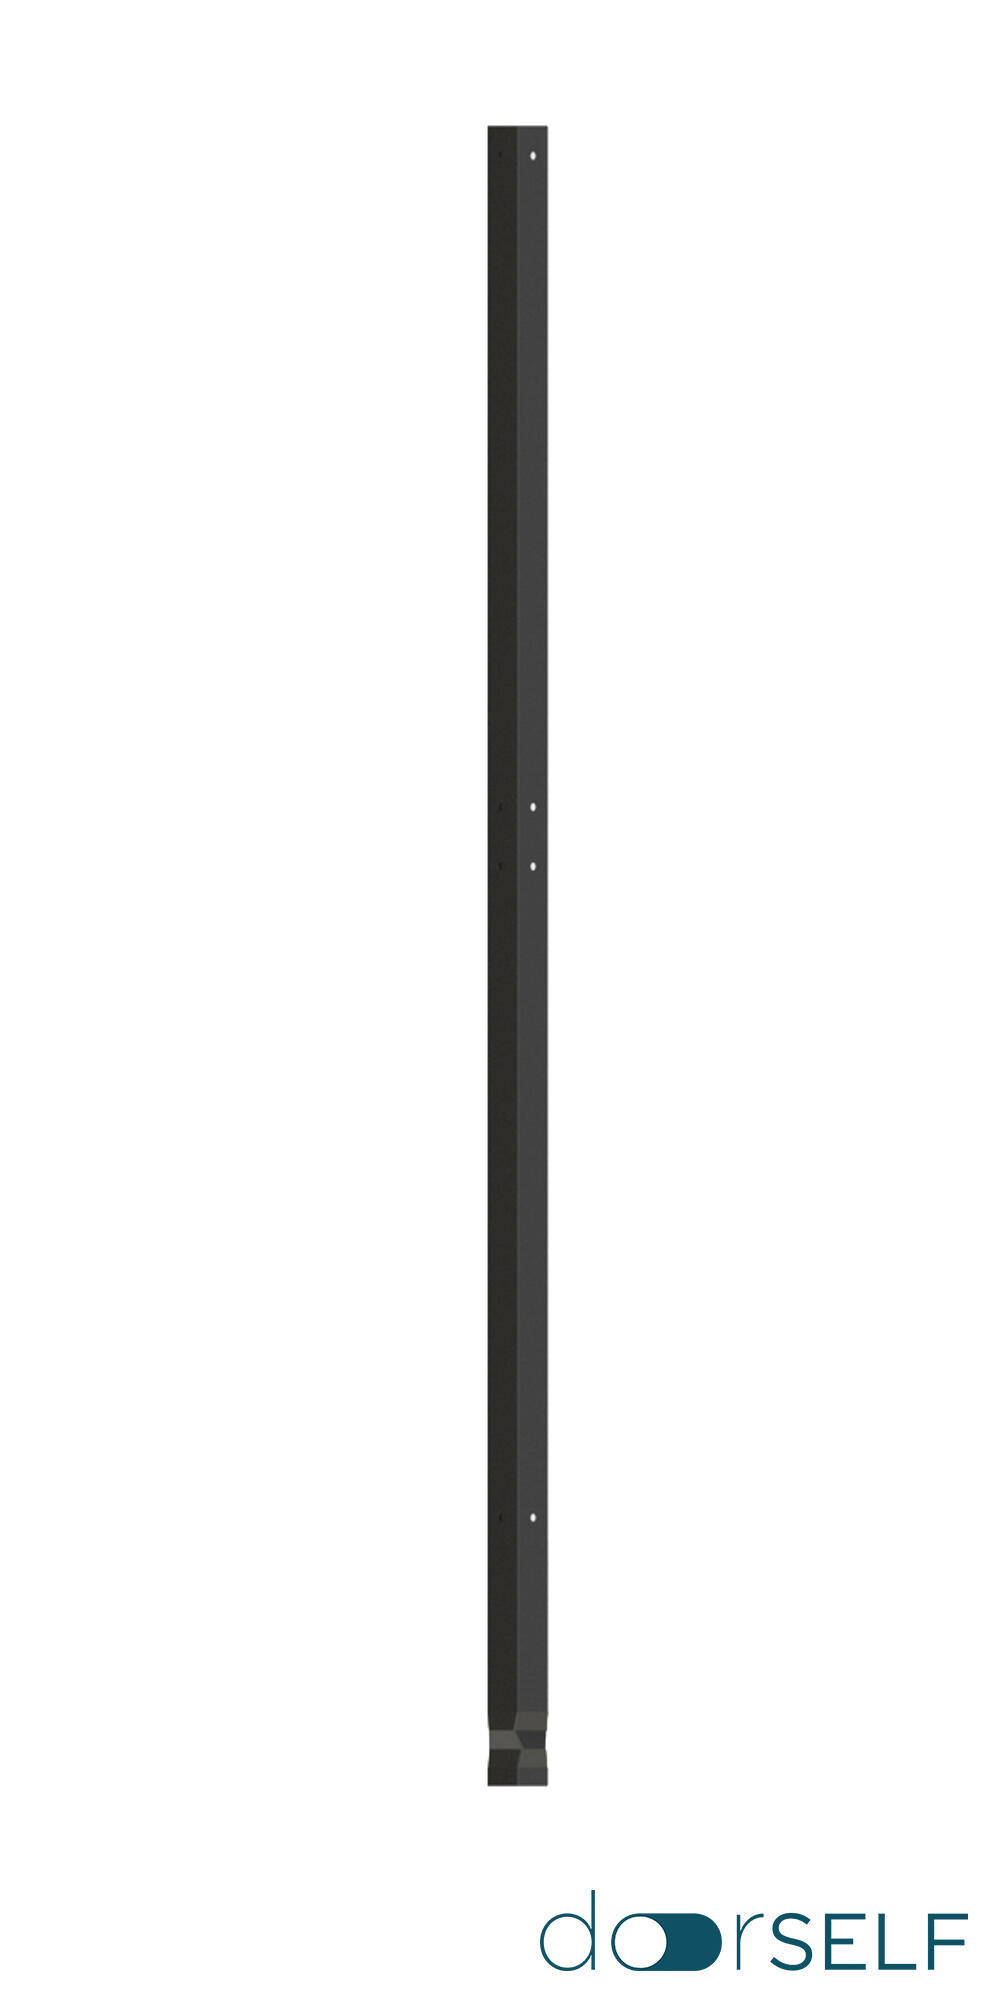 Poste de encastrar para valla de acero negro de 6 x 6 x 224.4 cm